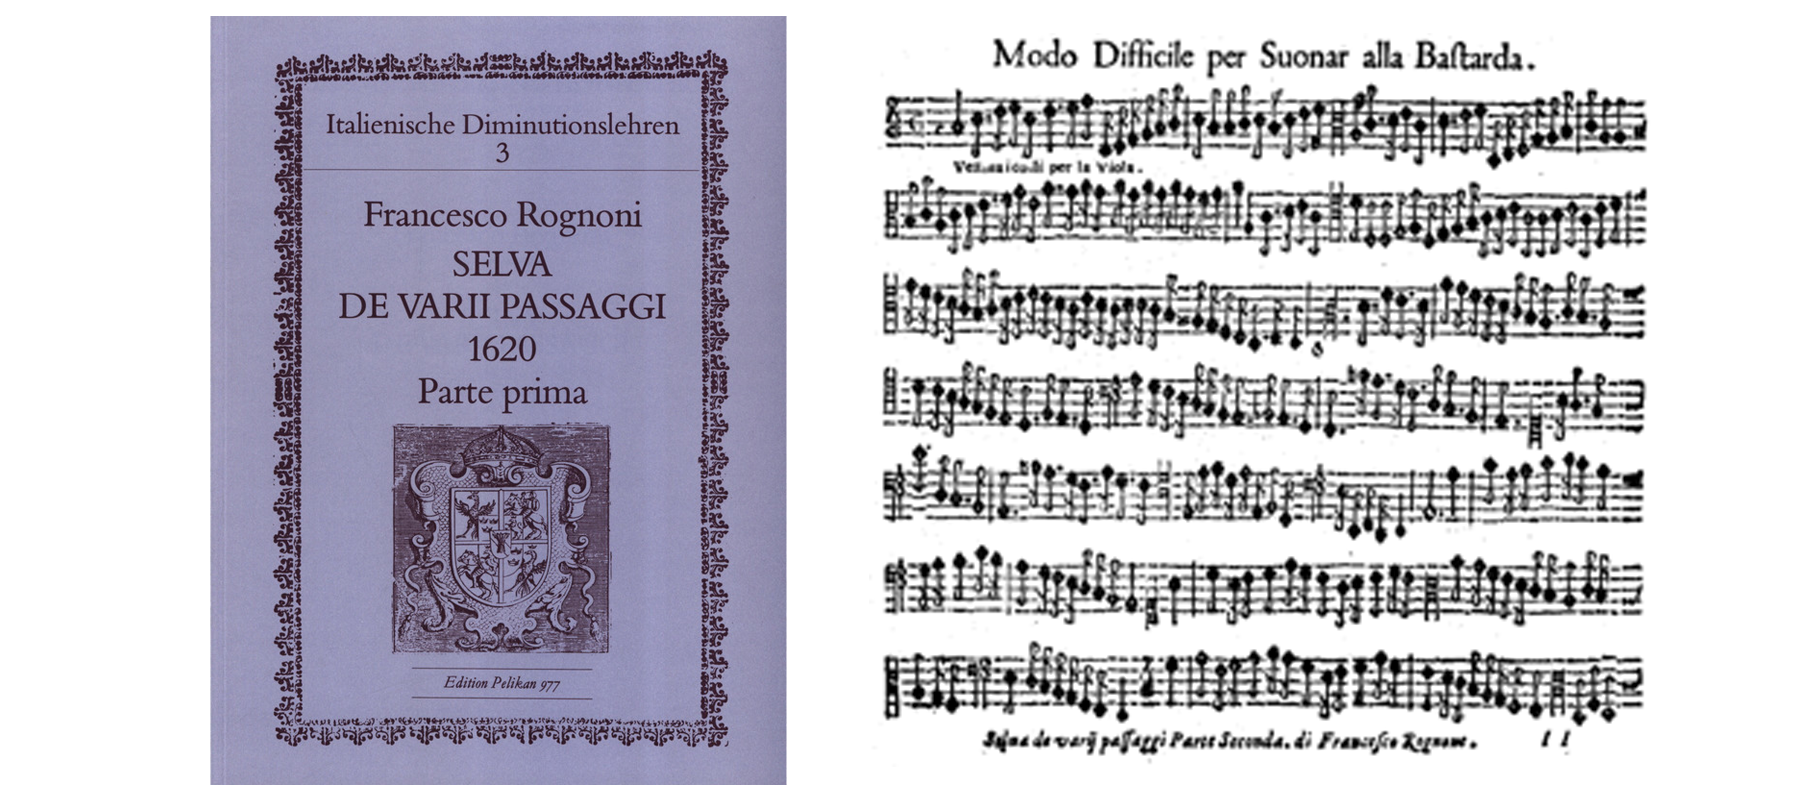 Passages and cover from Rognoni's Selva de varii passaggi (1620)